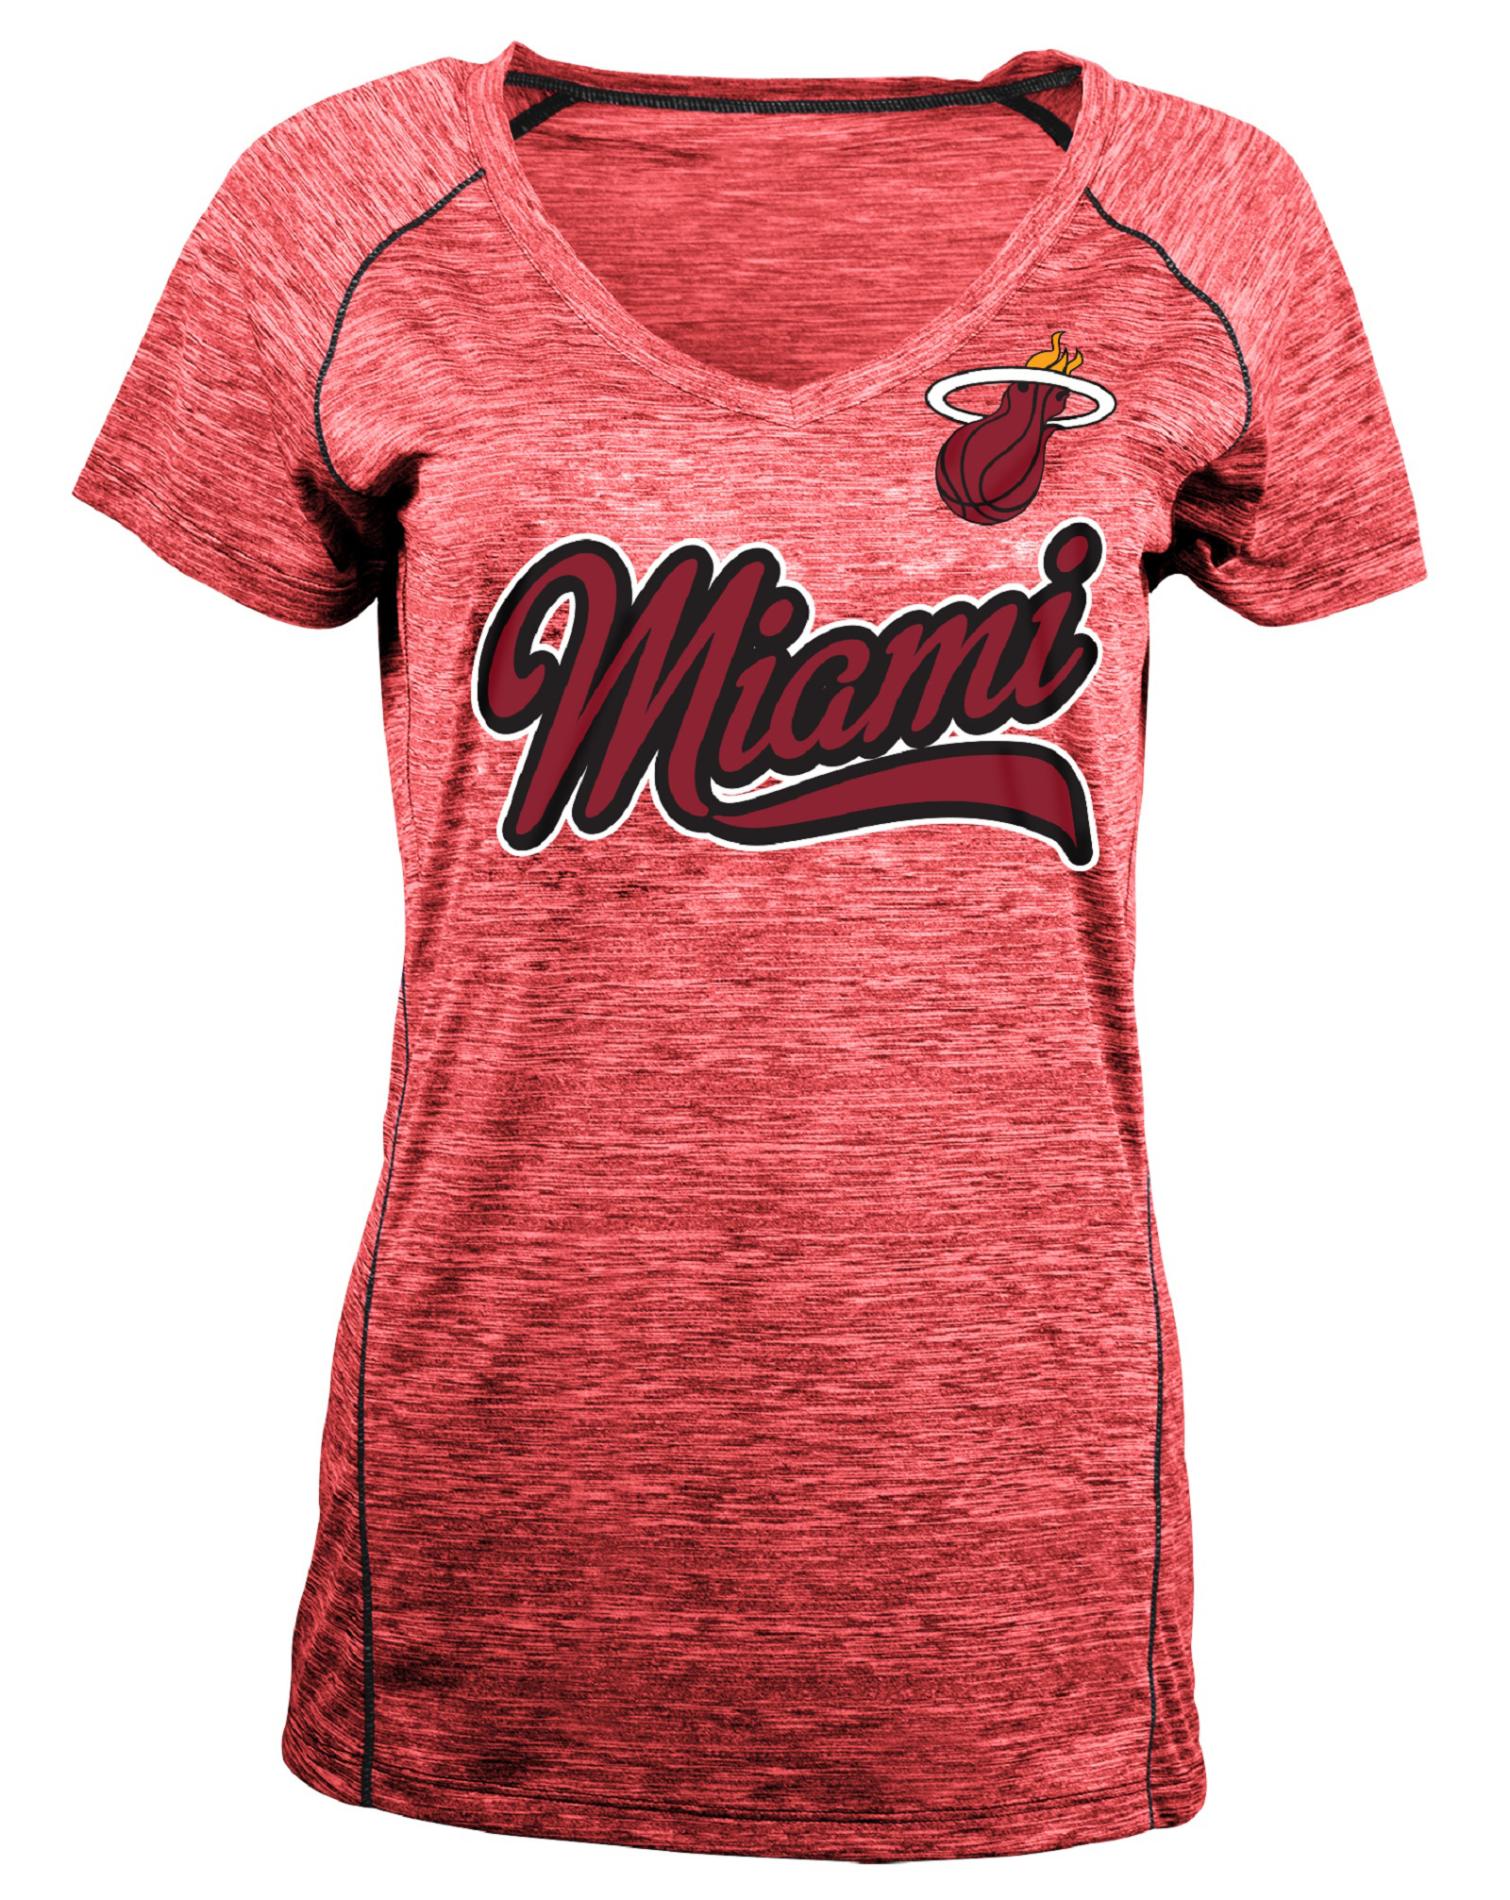 NBA(CANONICAL) Women's Performance Shirt - Miami Heat